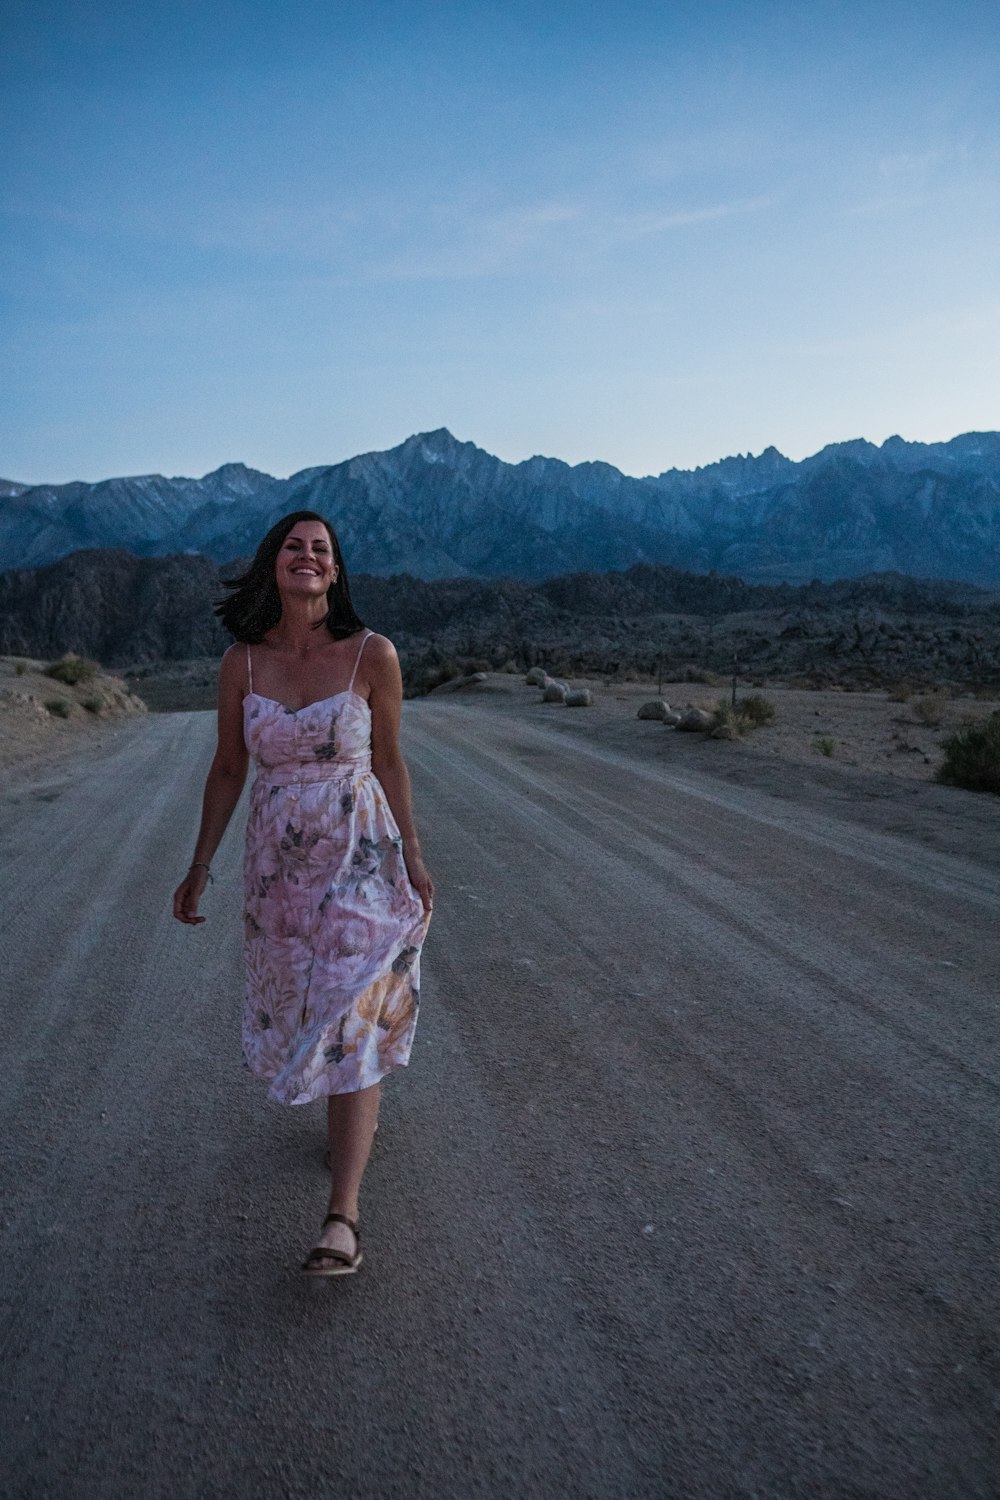 a woman in a dress walking down a dirt road